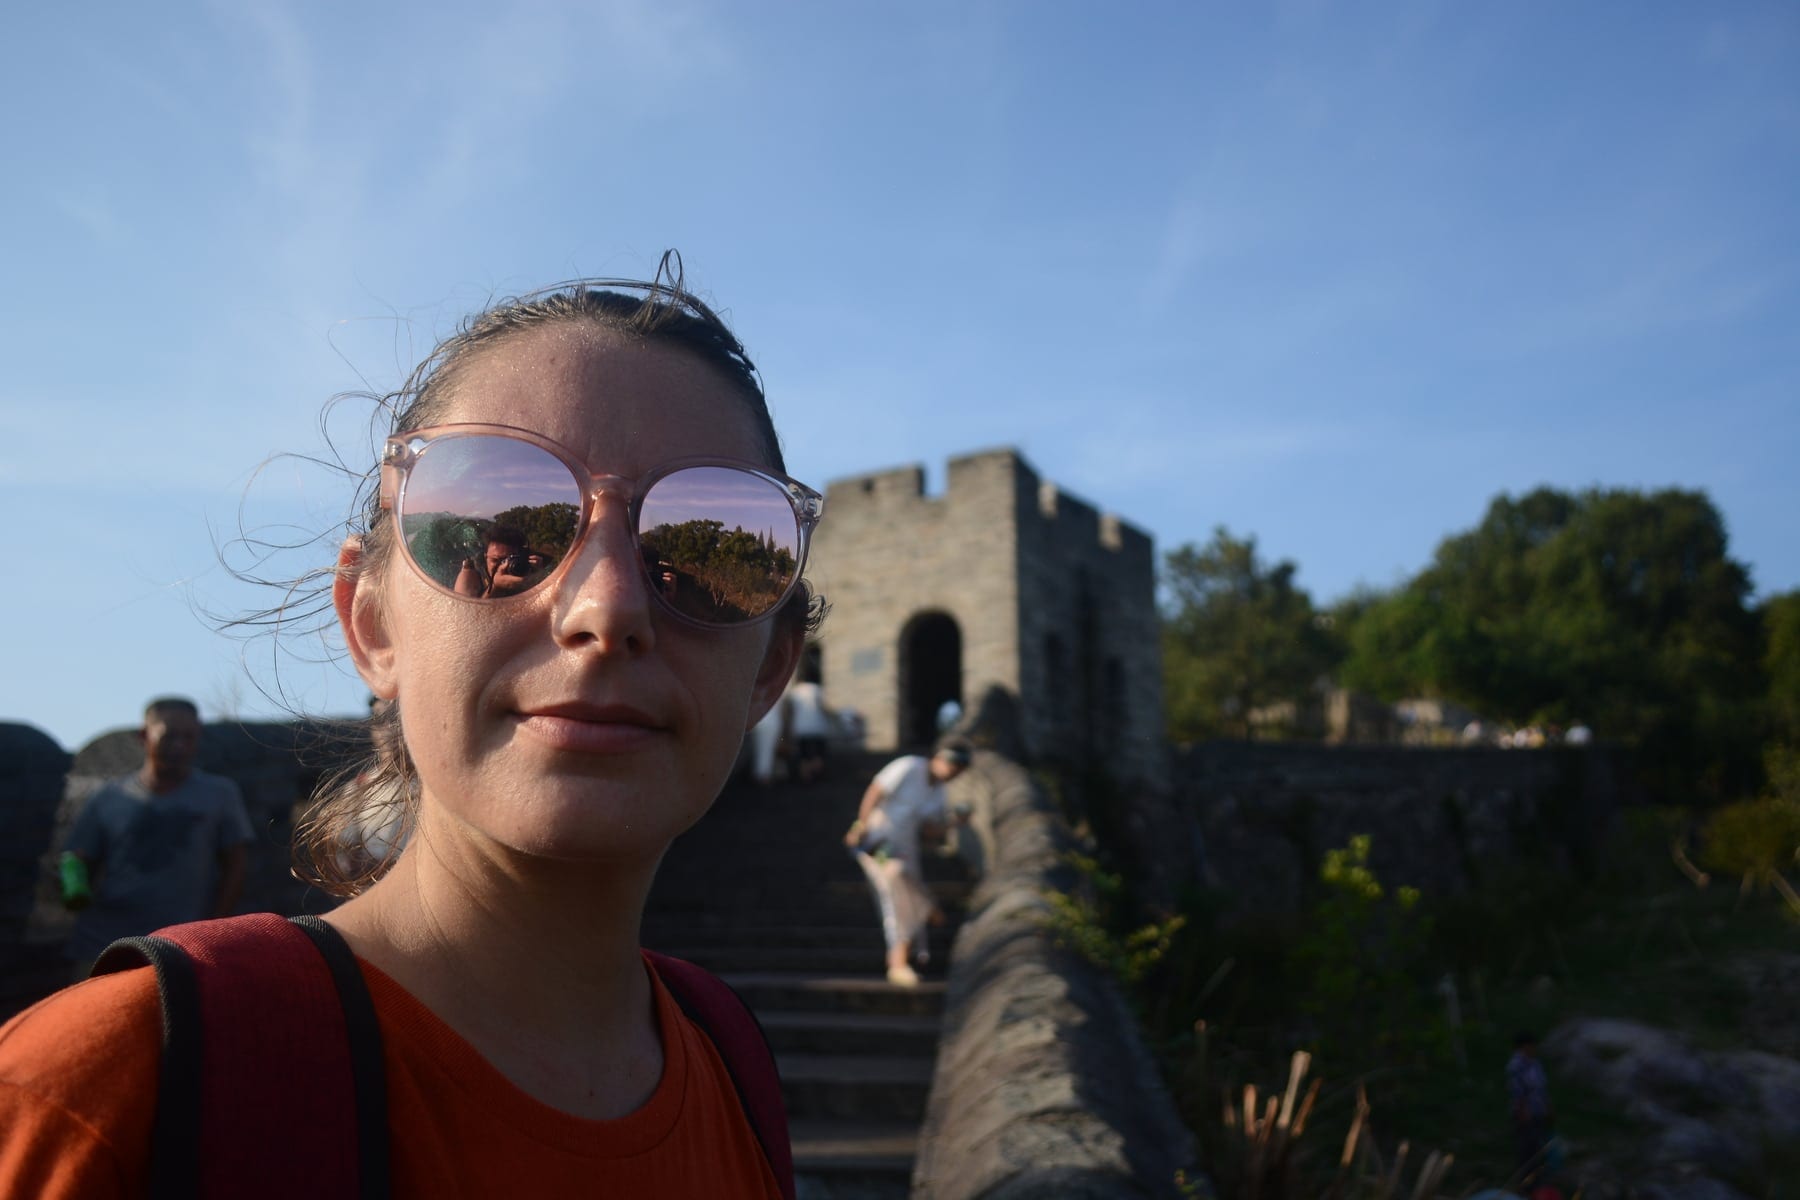 China Great Wall Zhejiang no tourist